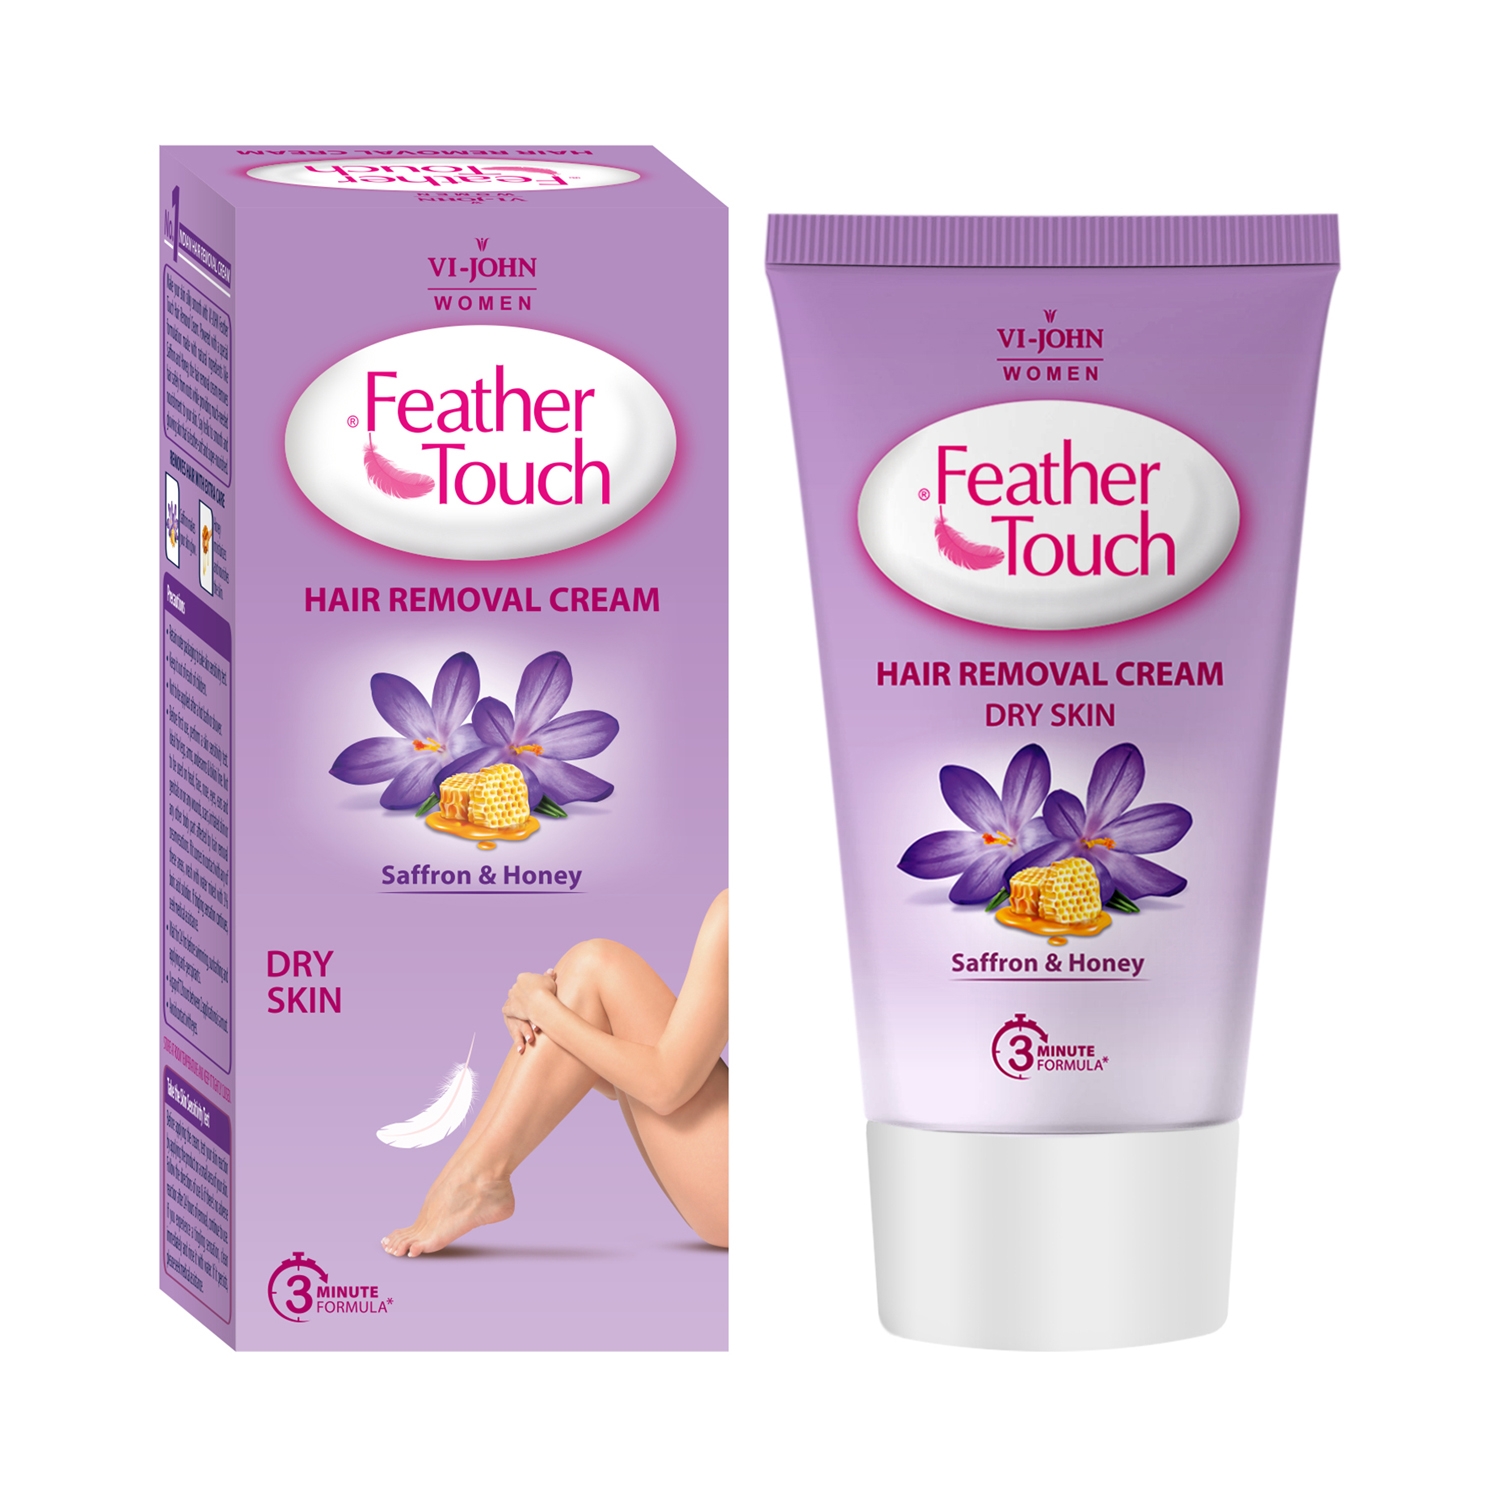 VI-JOHN | VI-JOHN Feather Touch Hair Removal Cream With Honey & Saffron Tube For Dry Skin (40g)